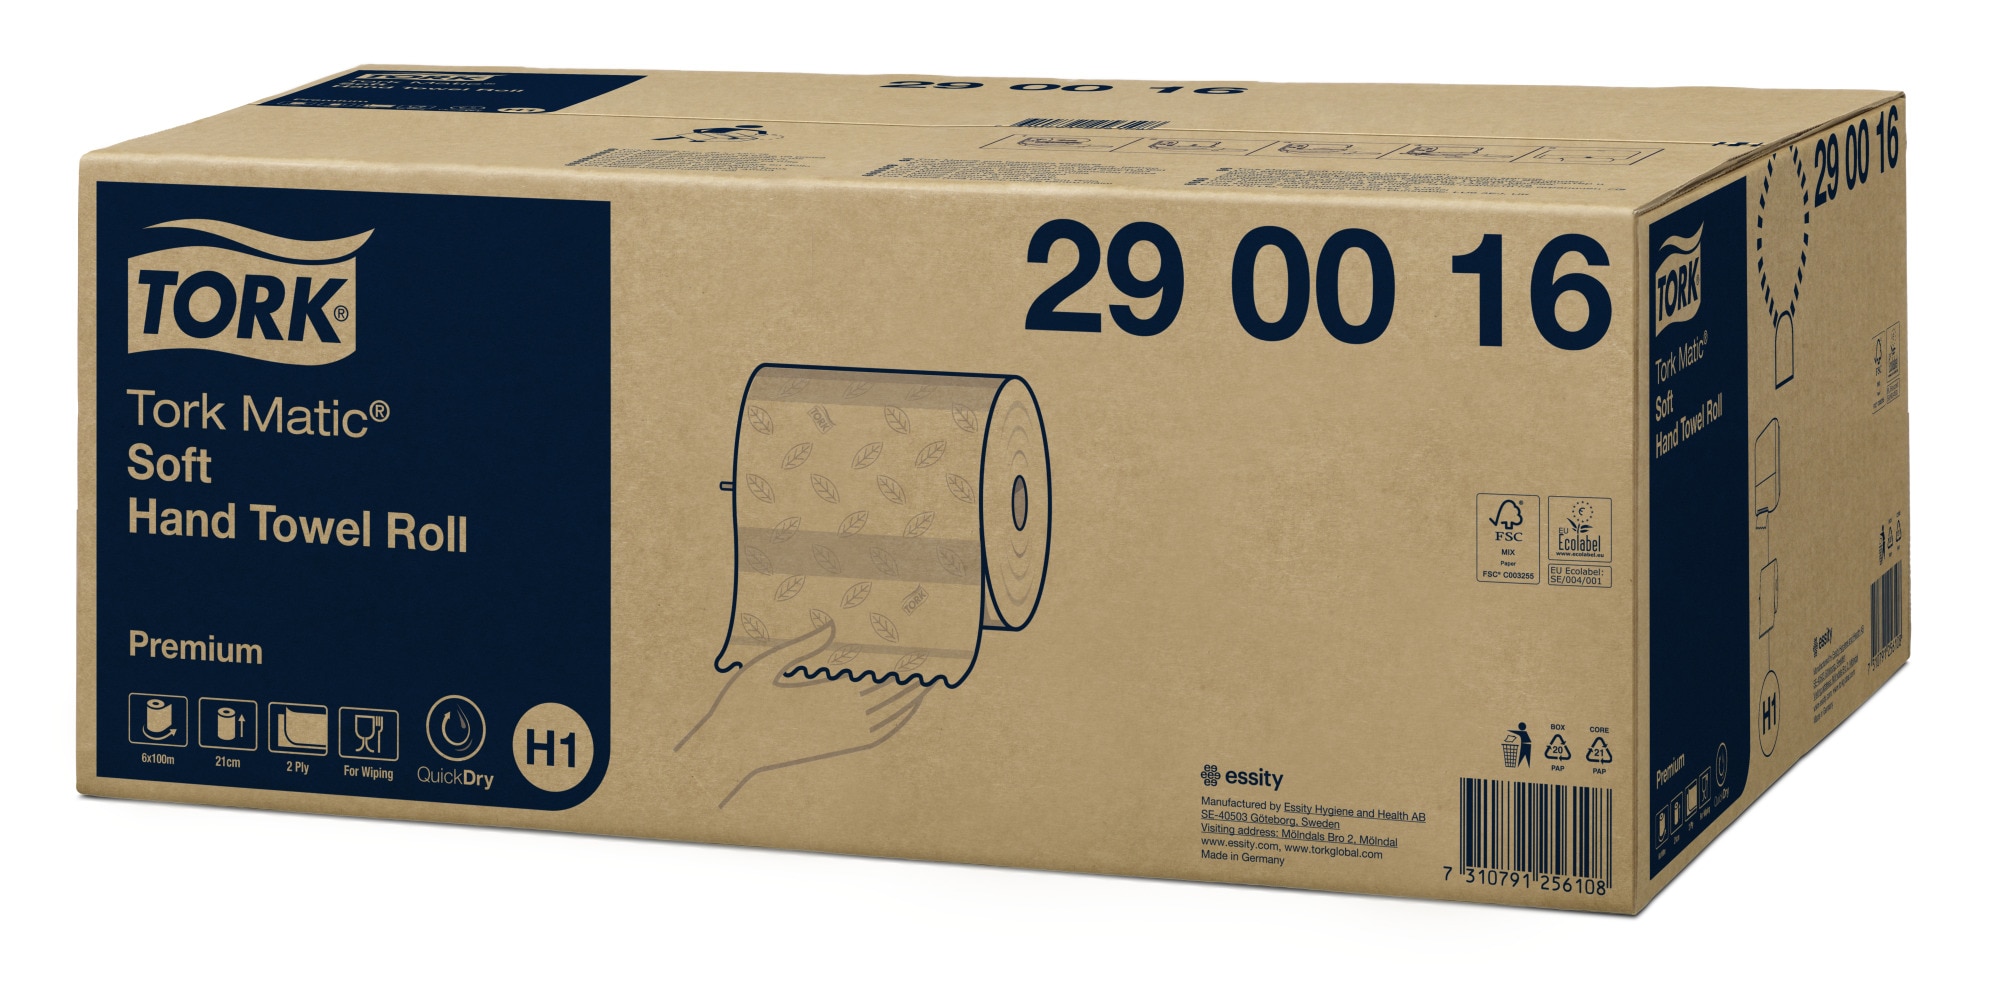 Tork Matic® Soft Hand Towel Roll Premium | 290016 | Hand towels 